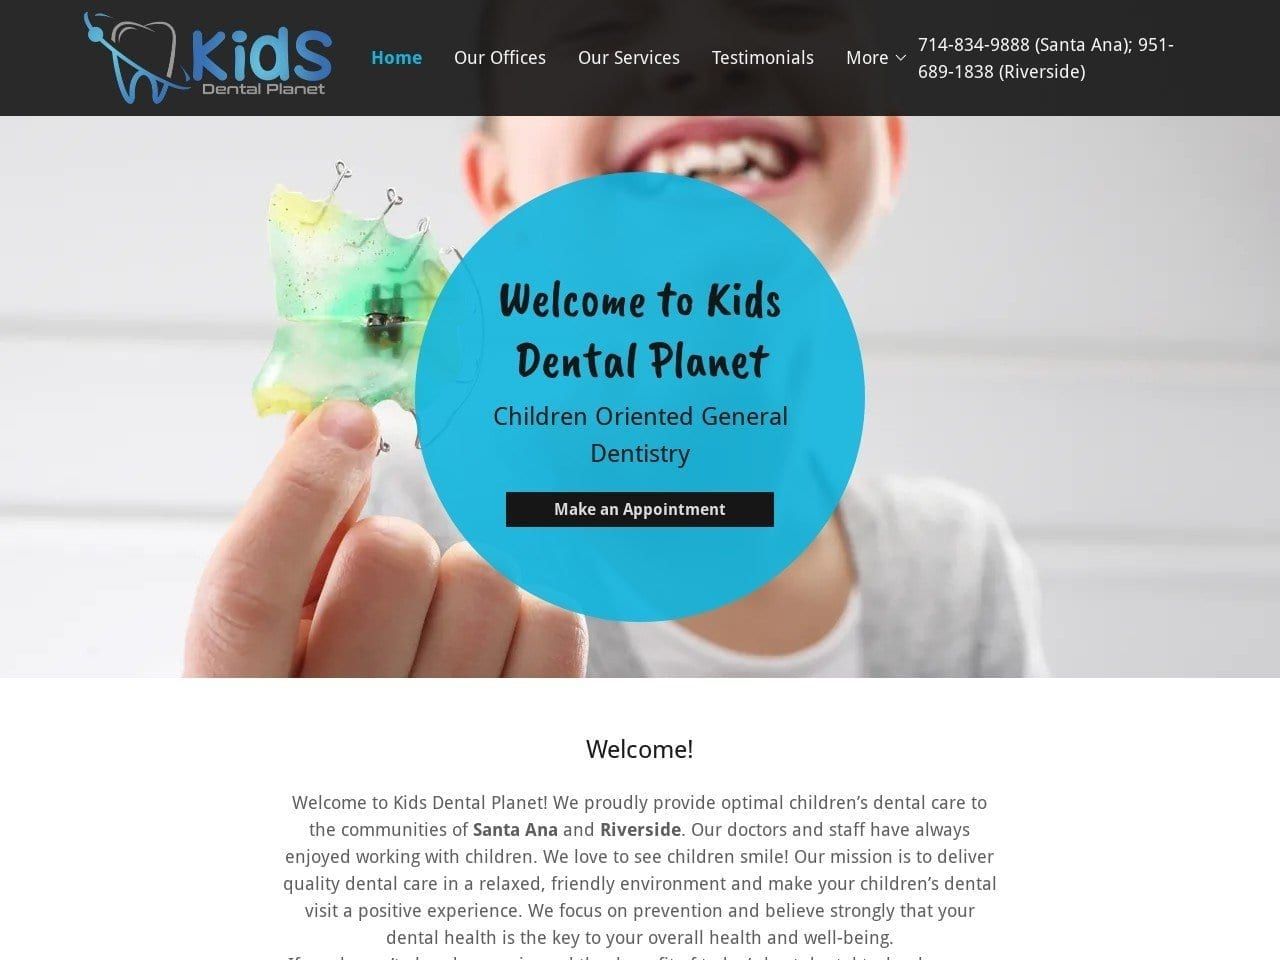 Kids Dental Planet Website Screenshot from kidsdentalplanet.com